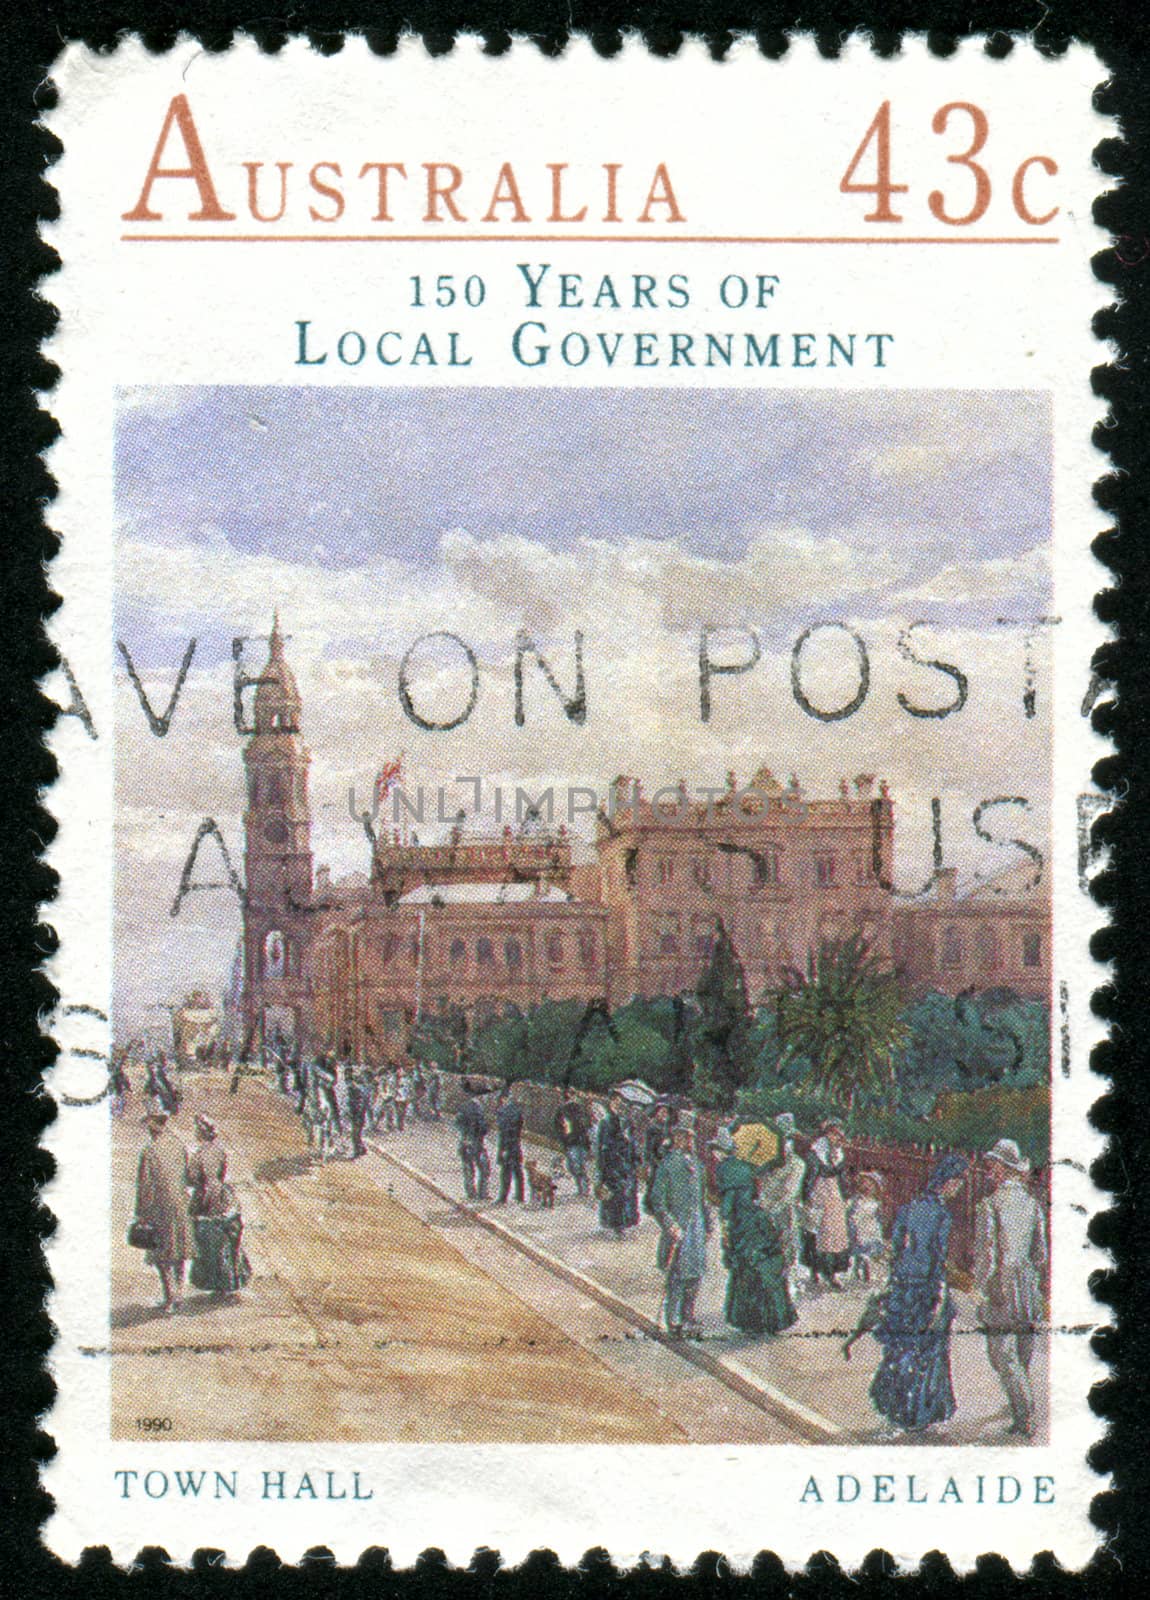 AUSTRALIA - CIRCA 1990: stamp printed by Australia, shows Town Hall, Adelaide, circa 1990